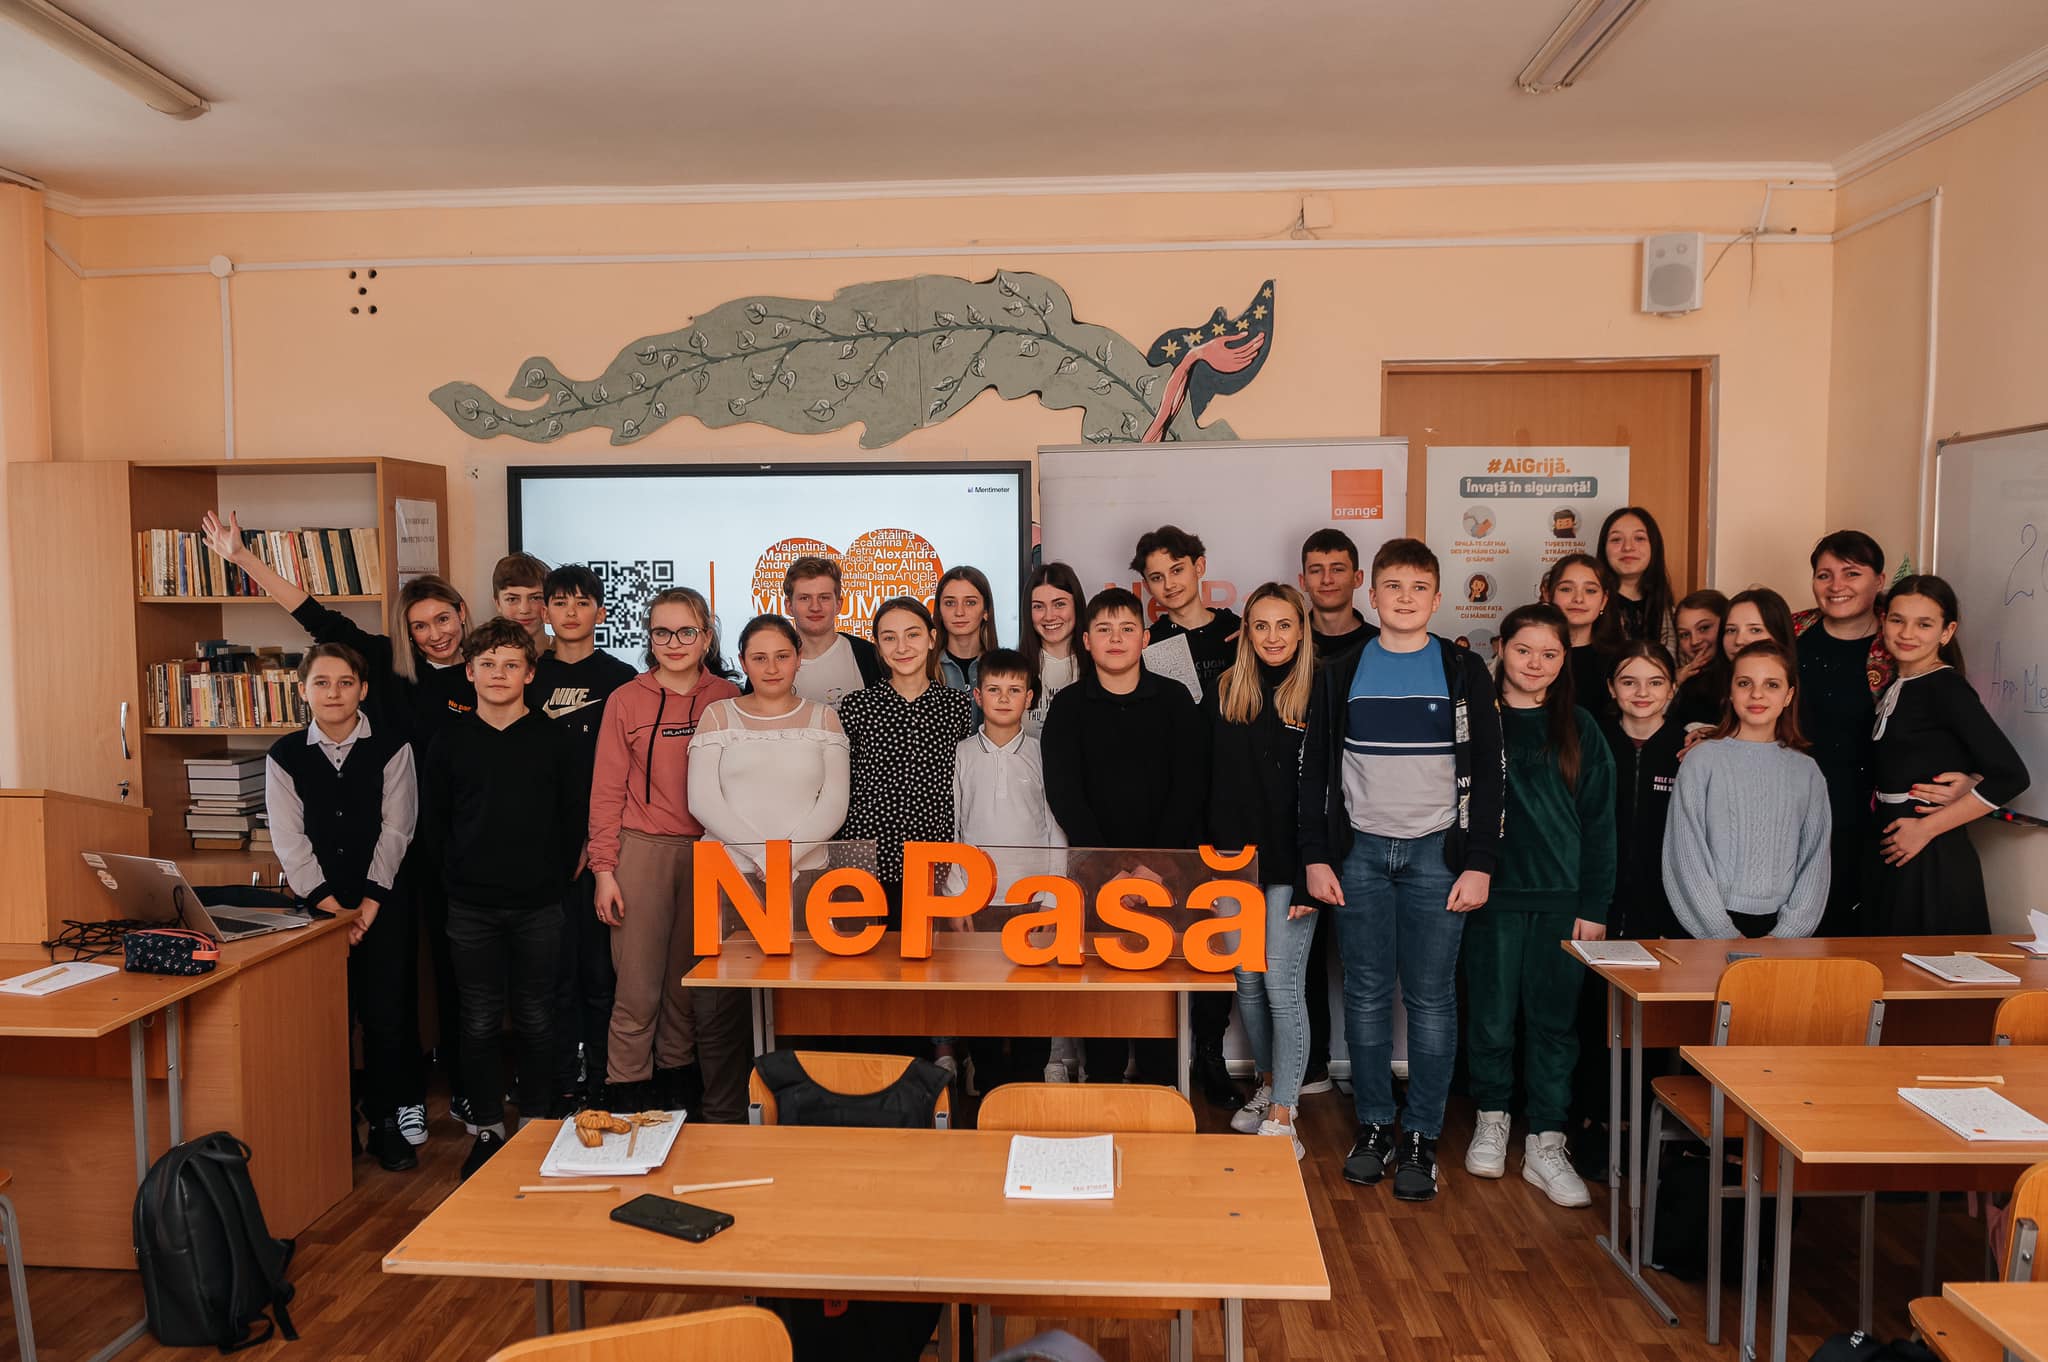 Training on EdTech – Orange Moldova